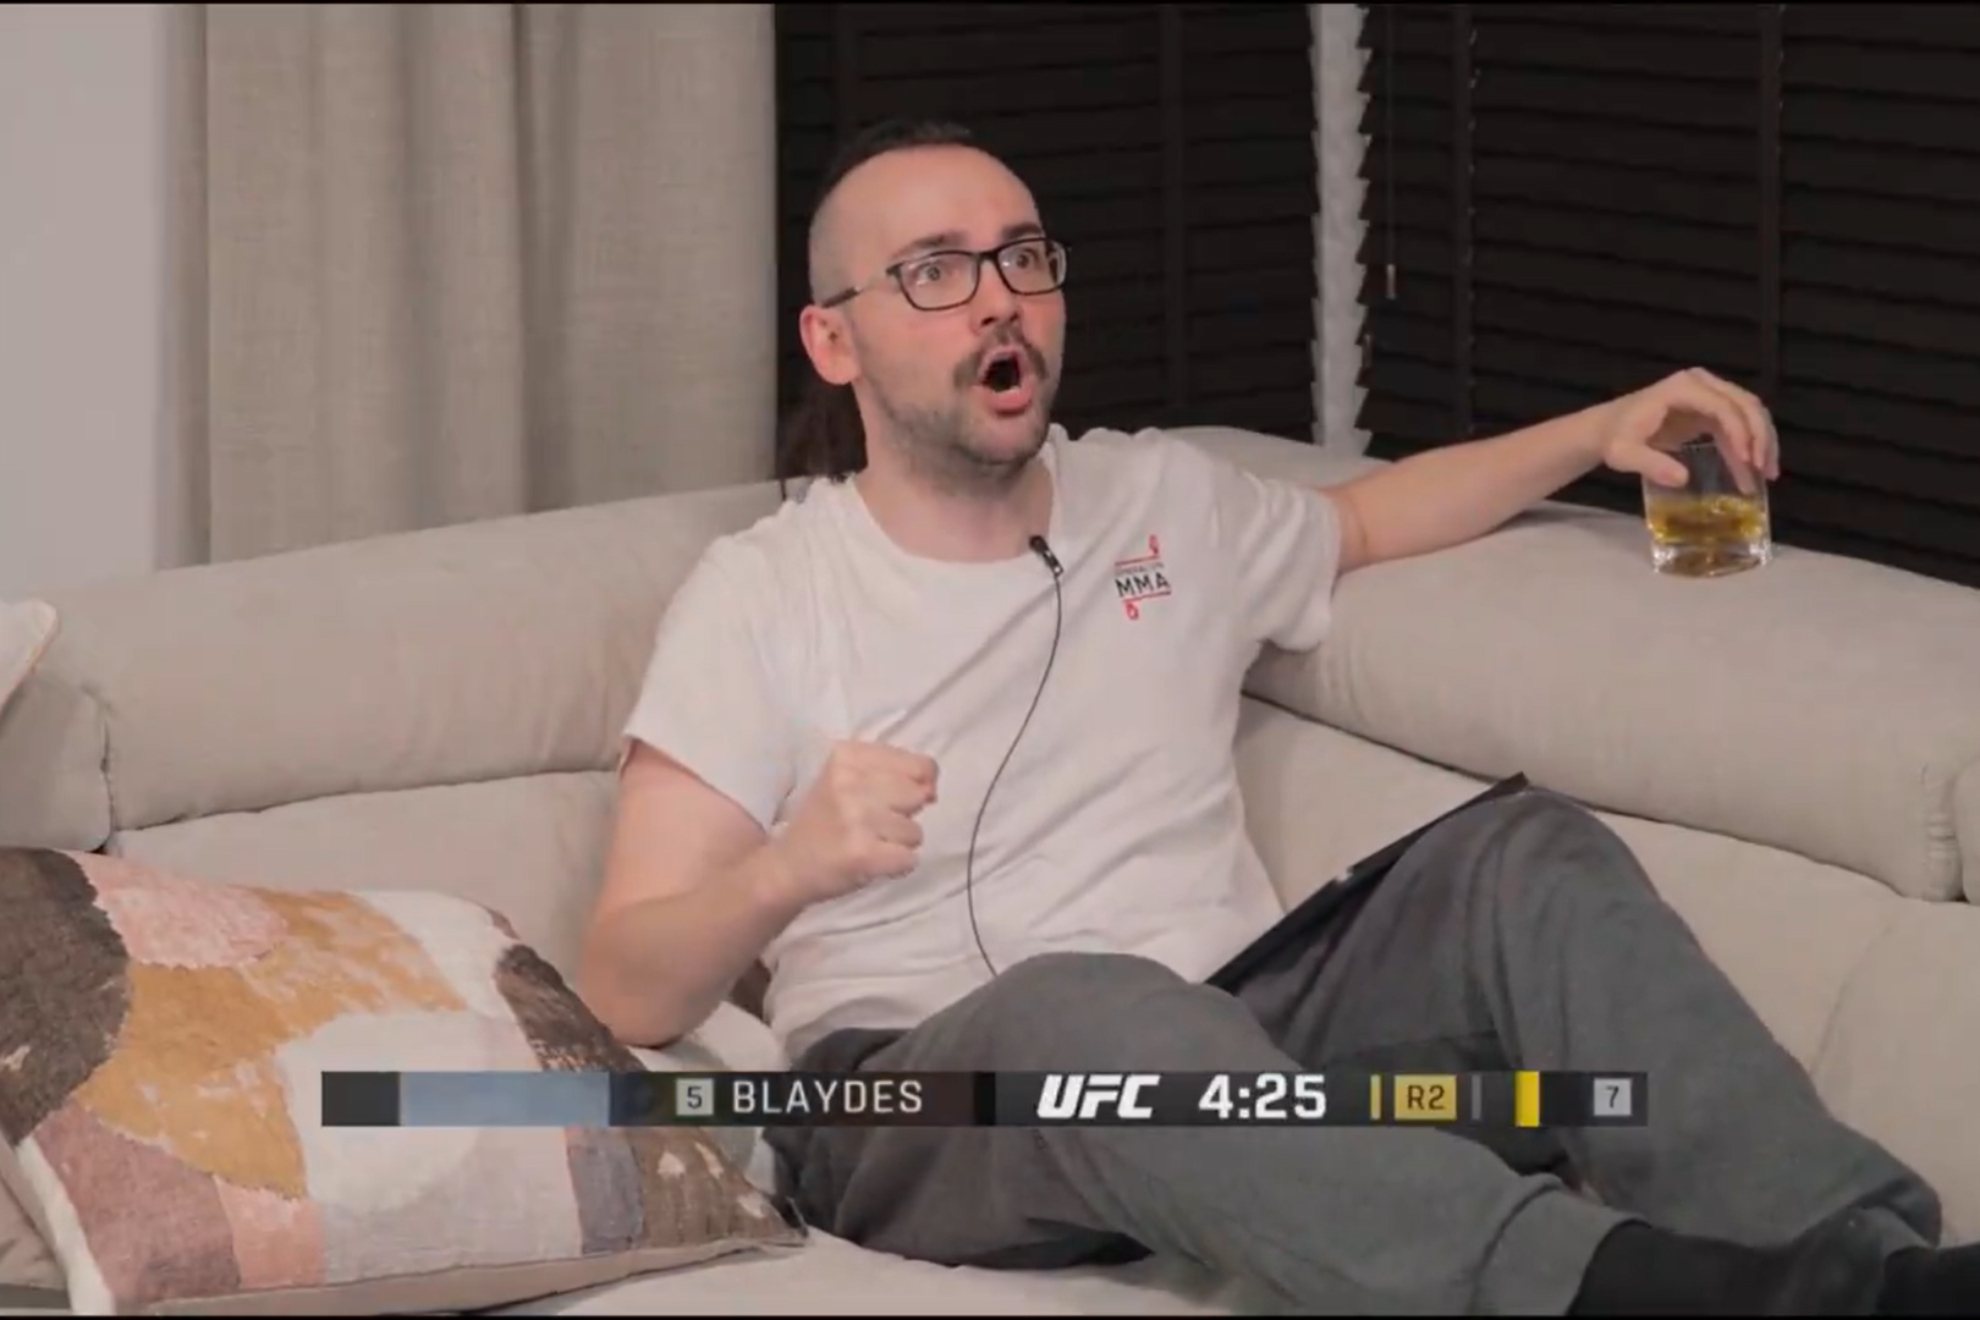 Xokas se vuelve loco celebrando un KO en UFC 299: A tomar por culo tanto agarre!